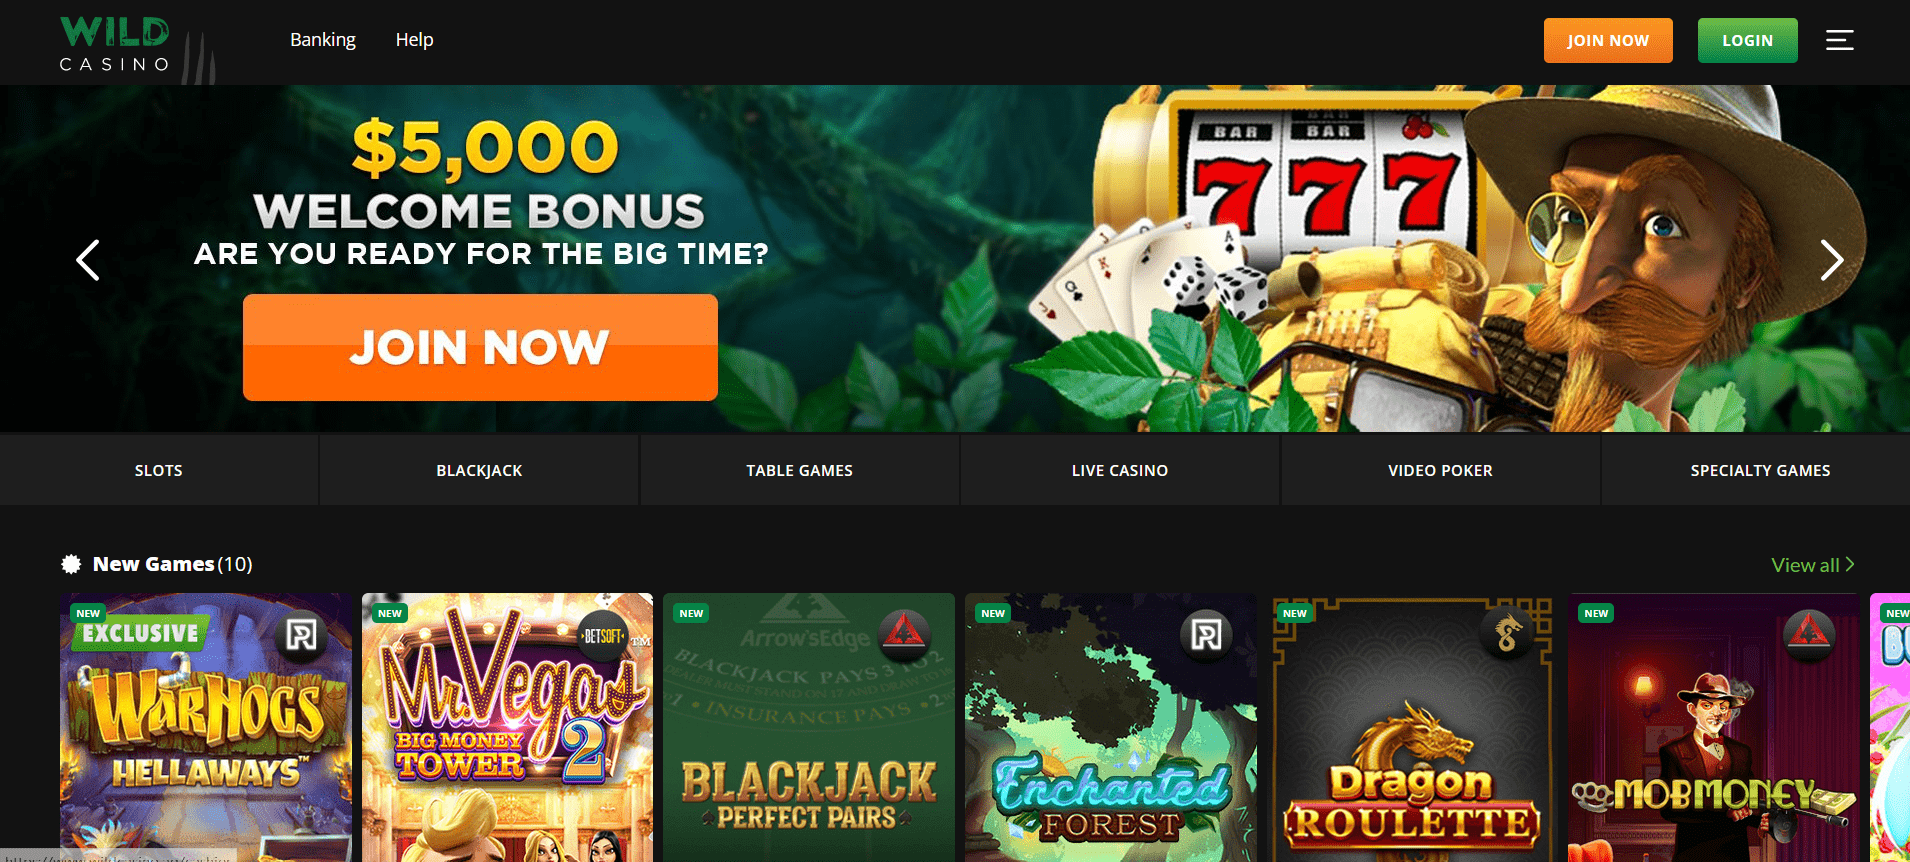 Wild Casino ruleta online juegos